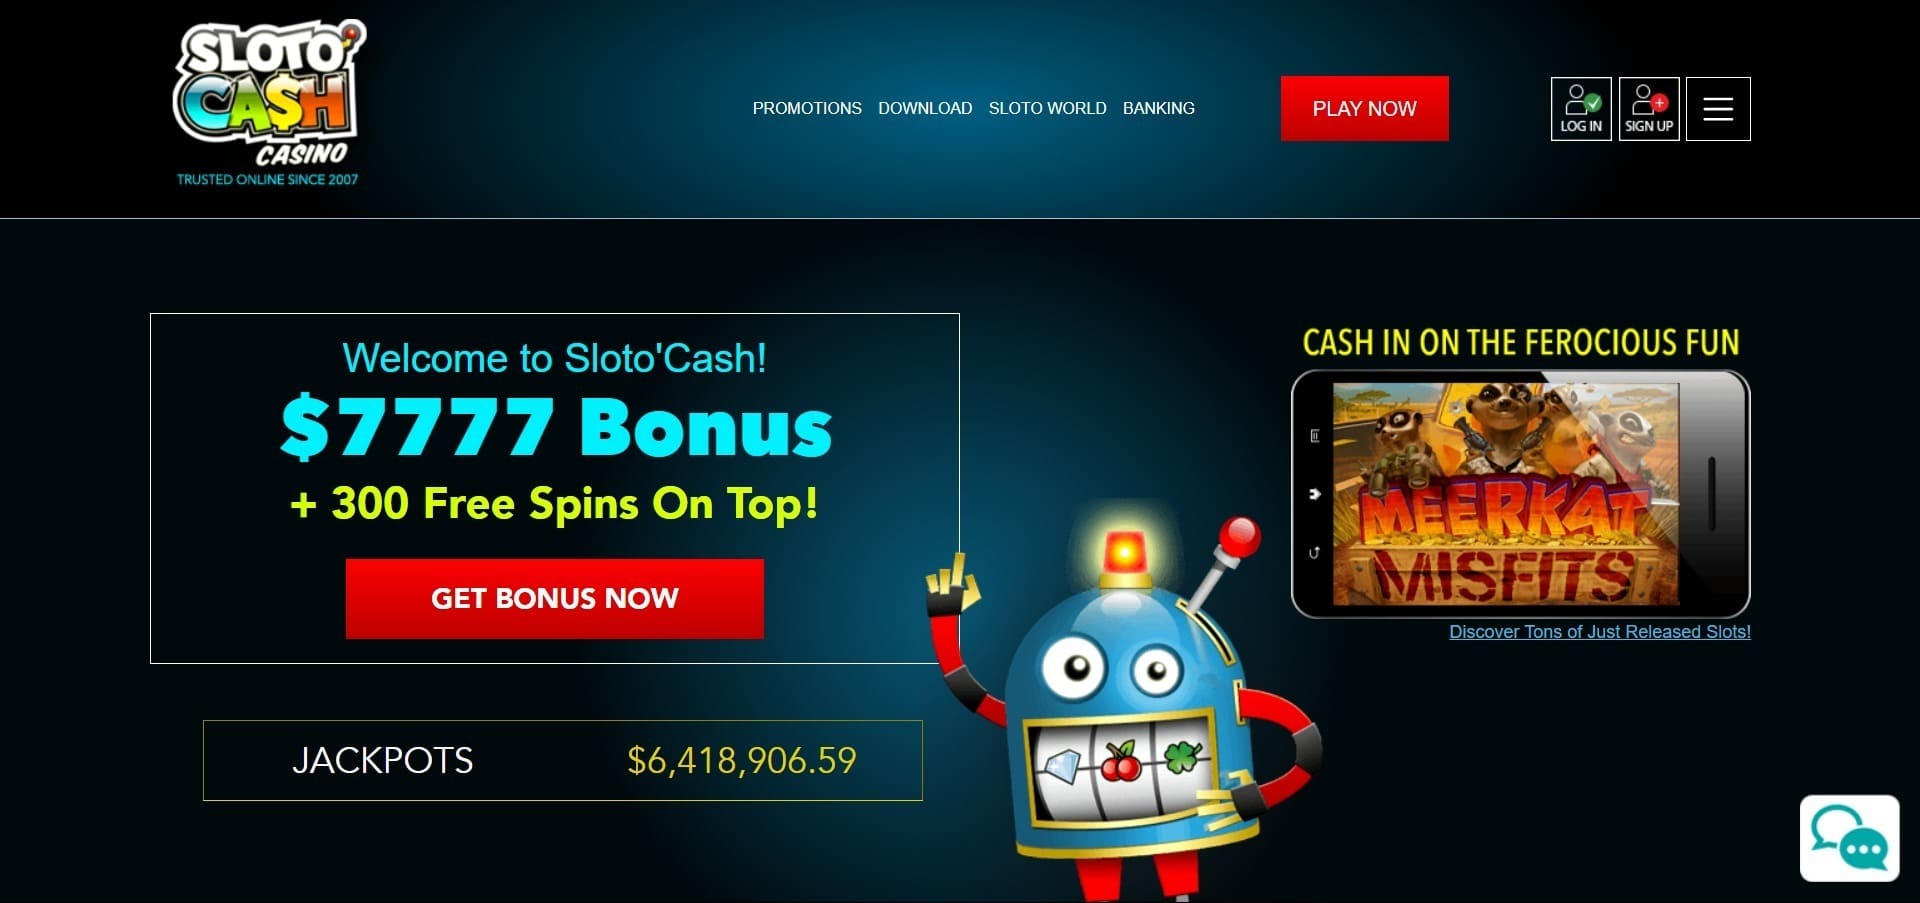 Official website of the Slotocash Casino